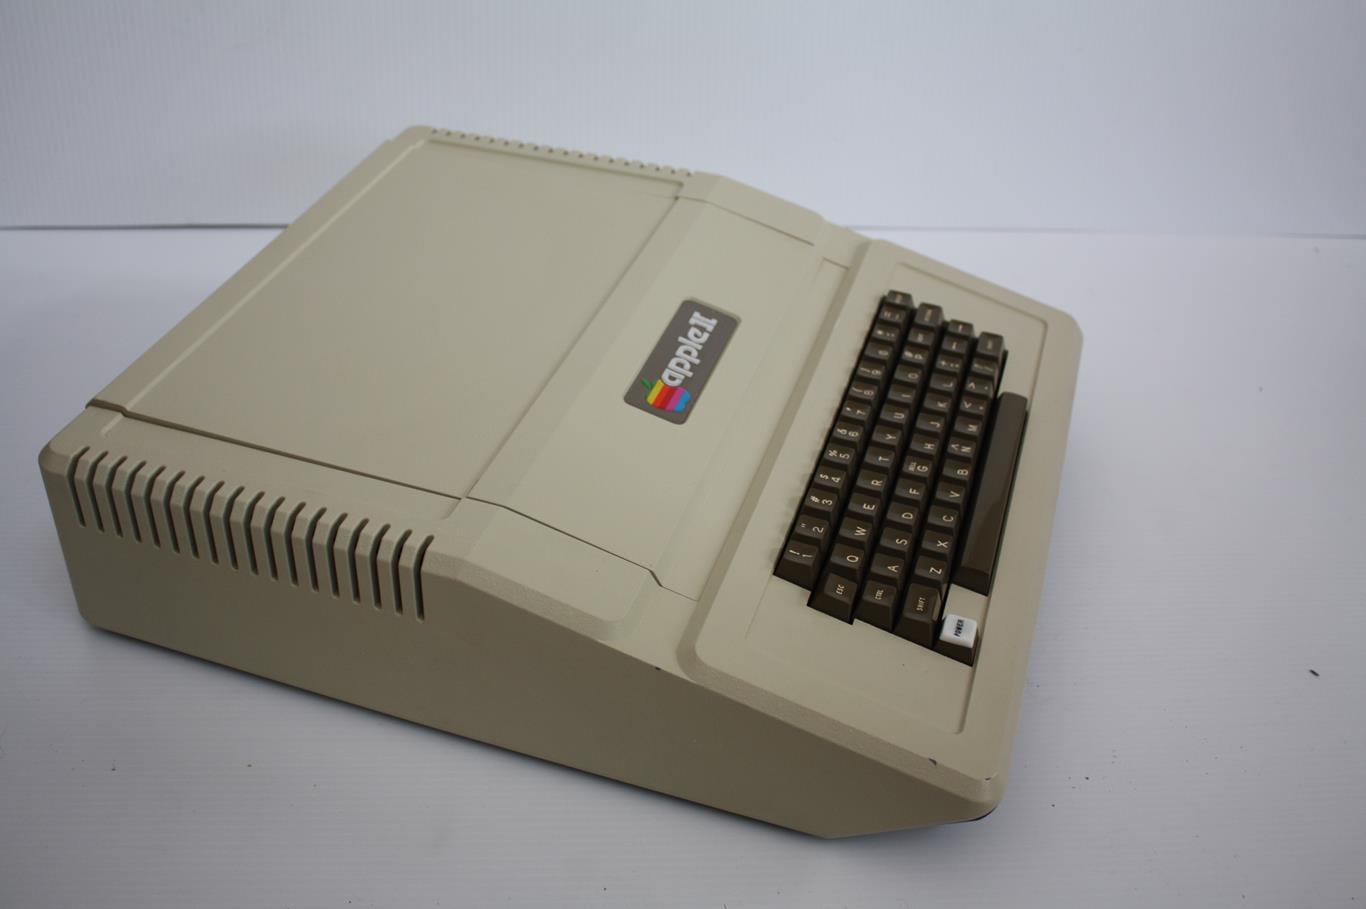 Apple II  - complete with keyboard